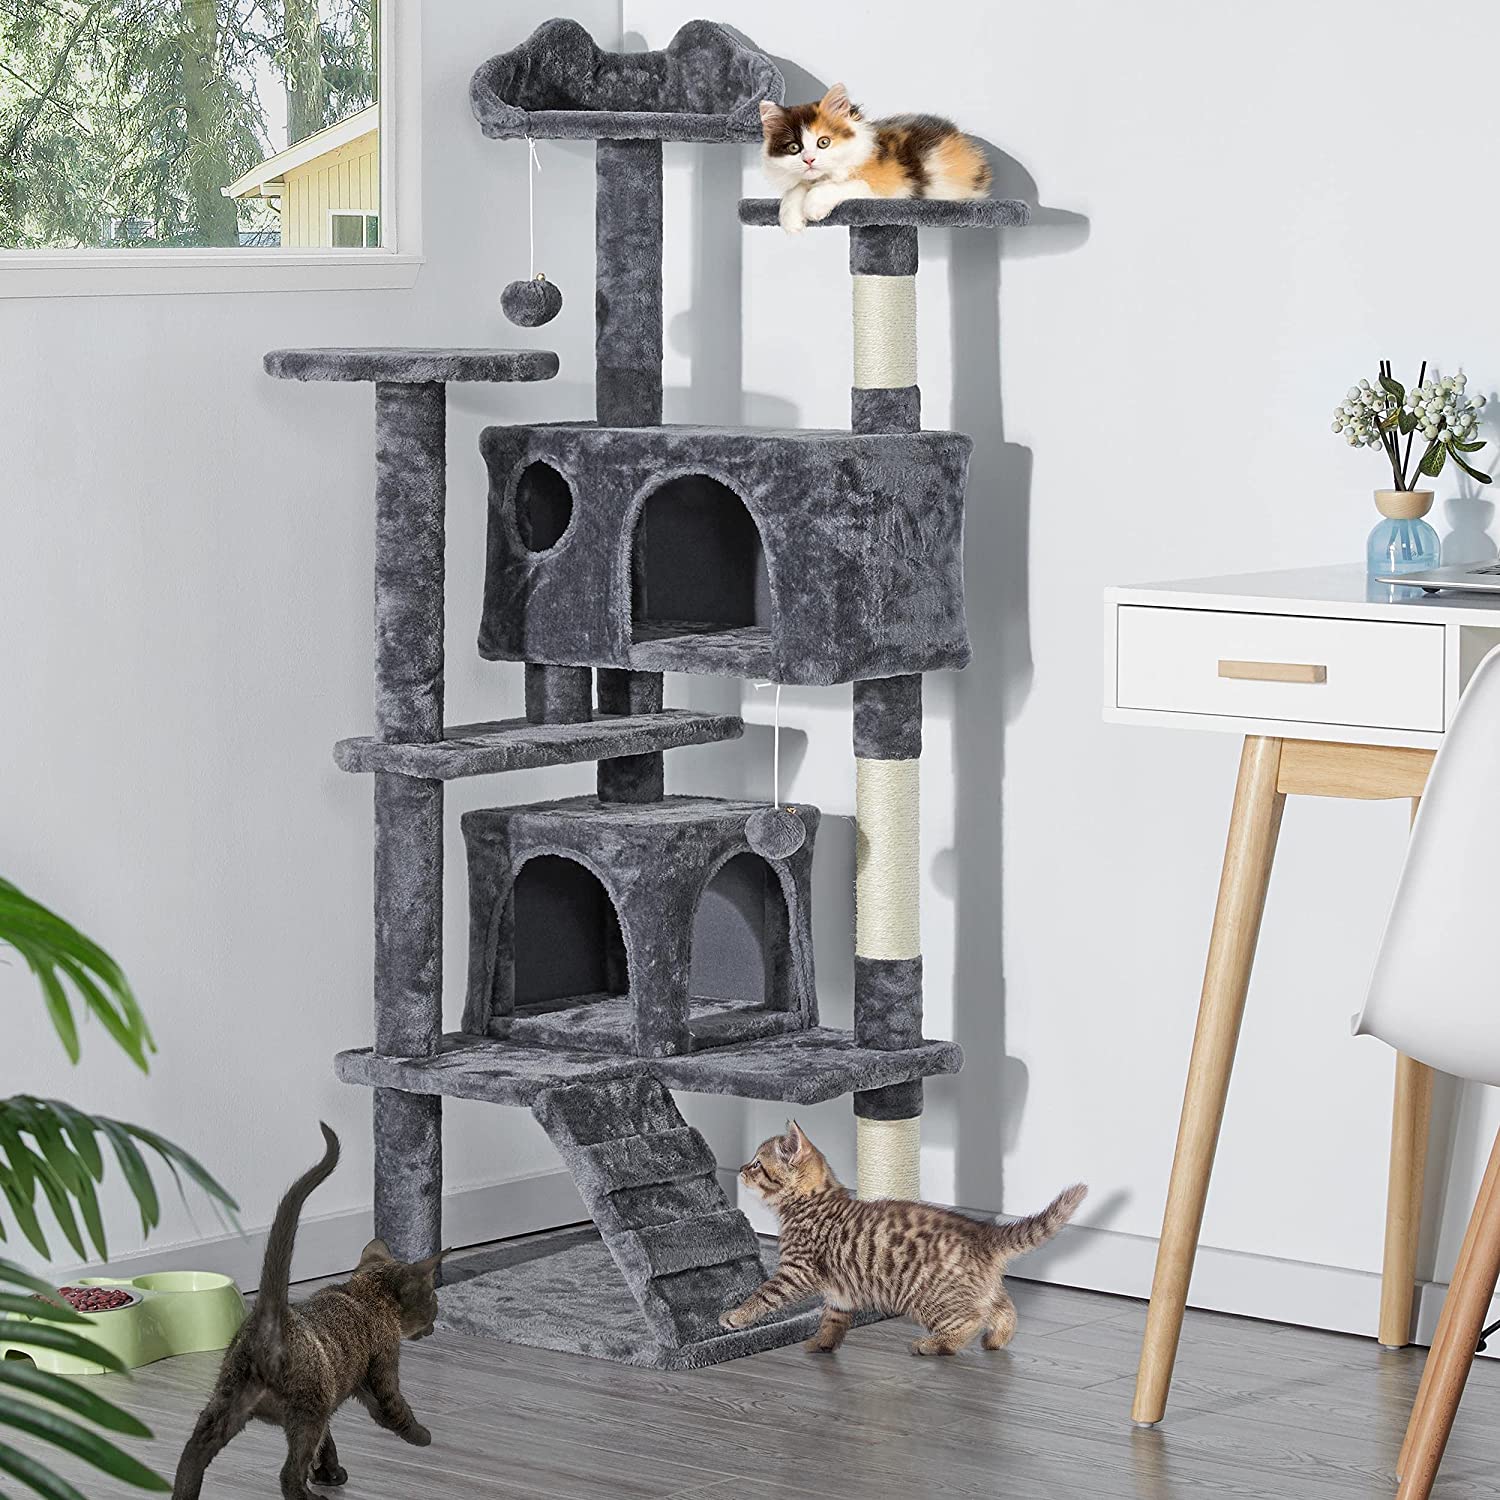 Wholesale Pet Toy Plush Animal Wholesale Luxury Large Cat Tree Tower Houses Cratcher Climbing Pet Cat Tree